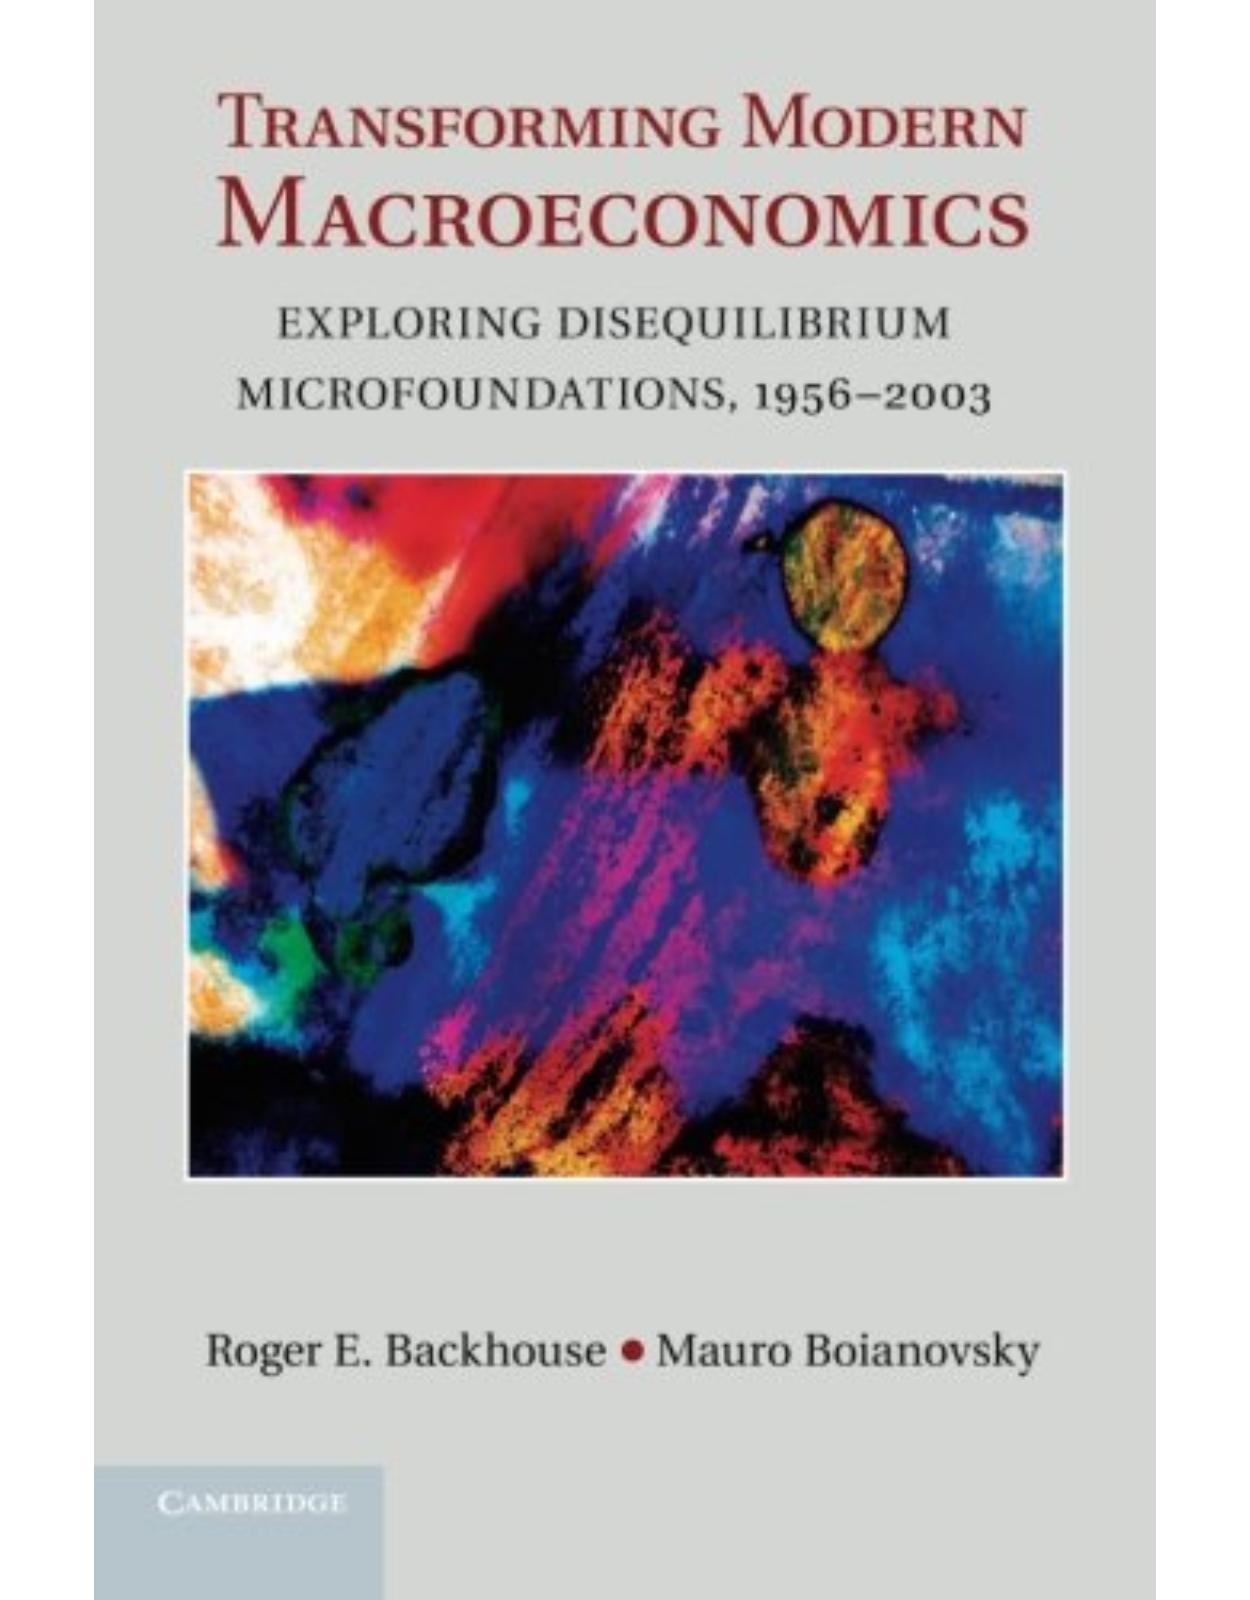 Transforming Modern Macroeconomics: Exploring Disequilibrium Microfoundations, 1956-2003 (Historical Perspectives on Modern Economics)